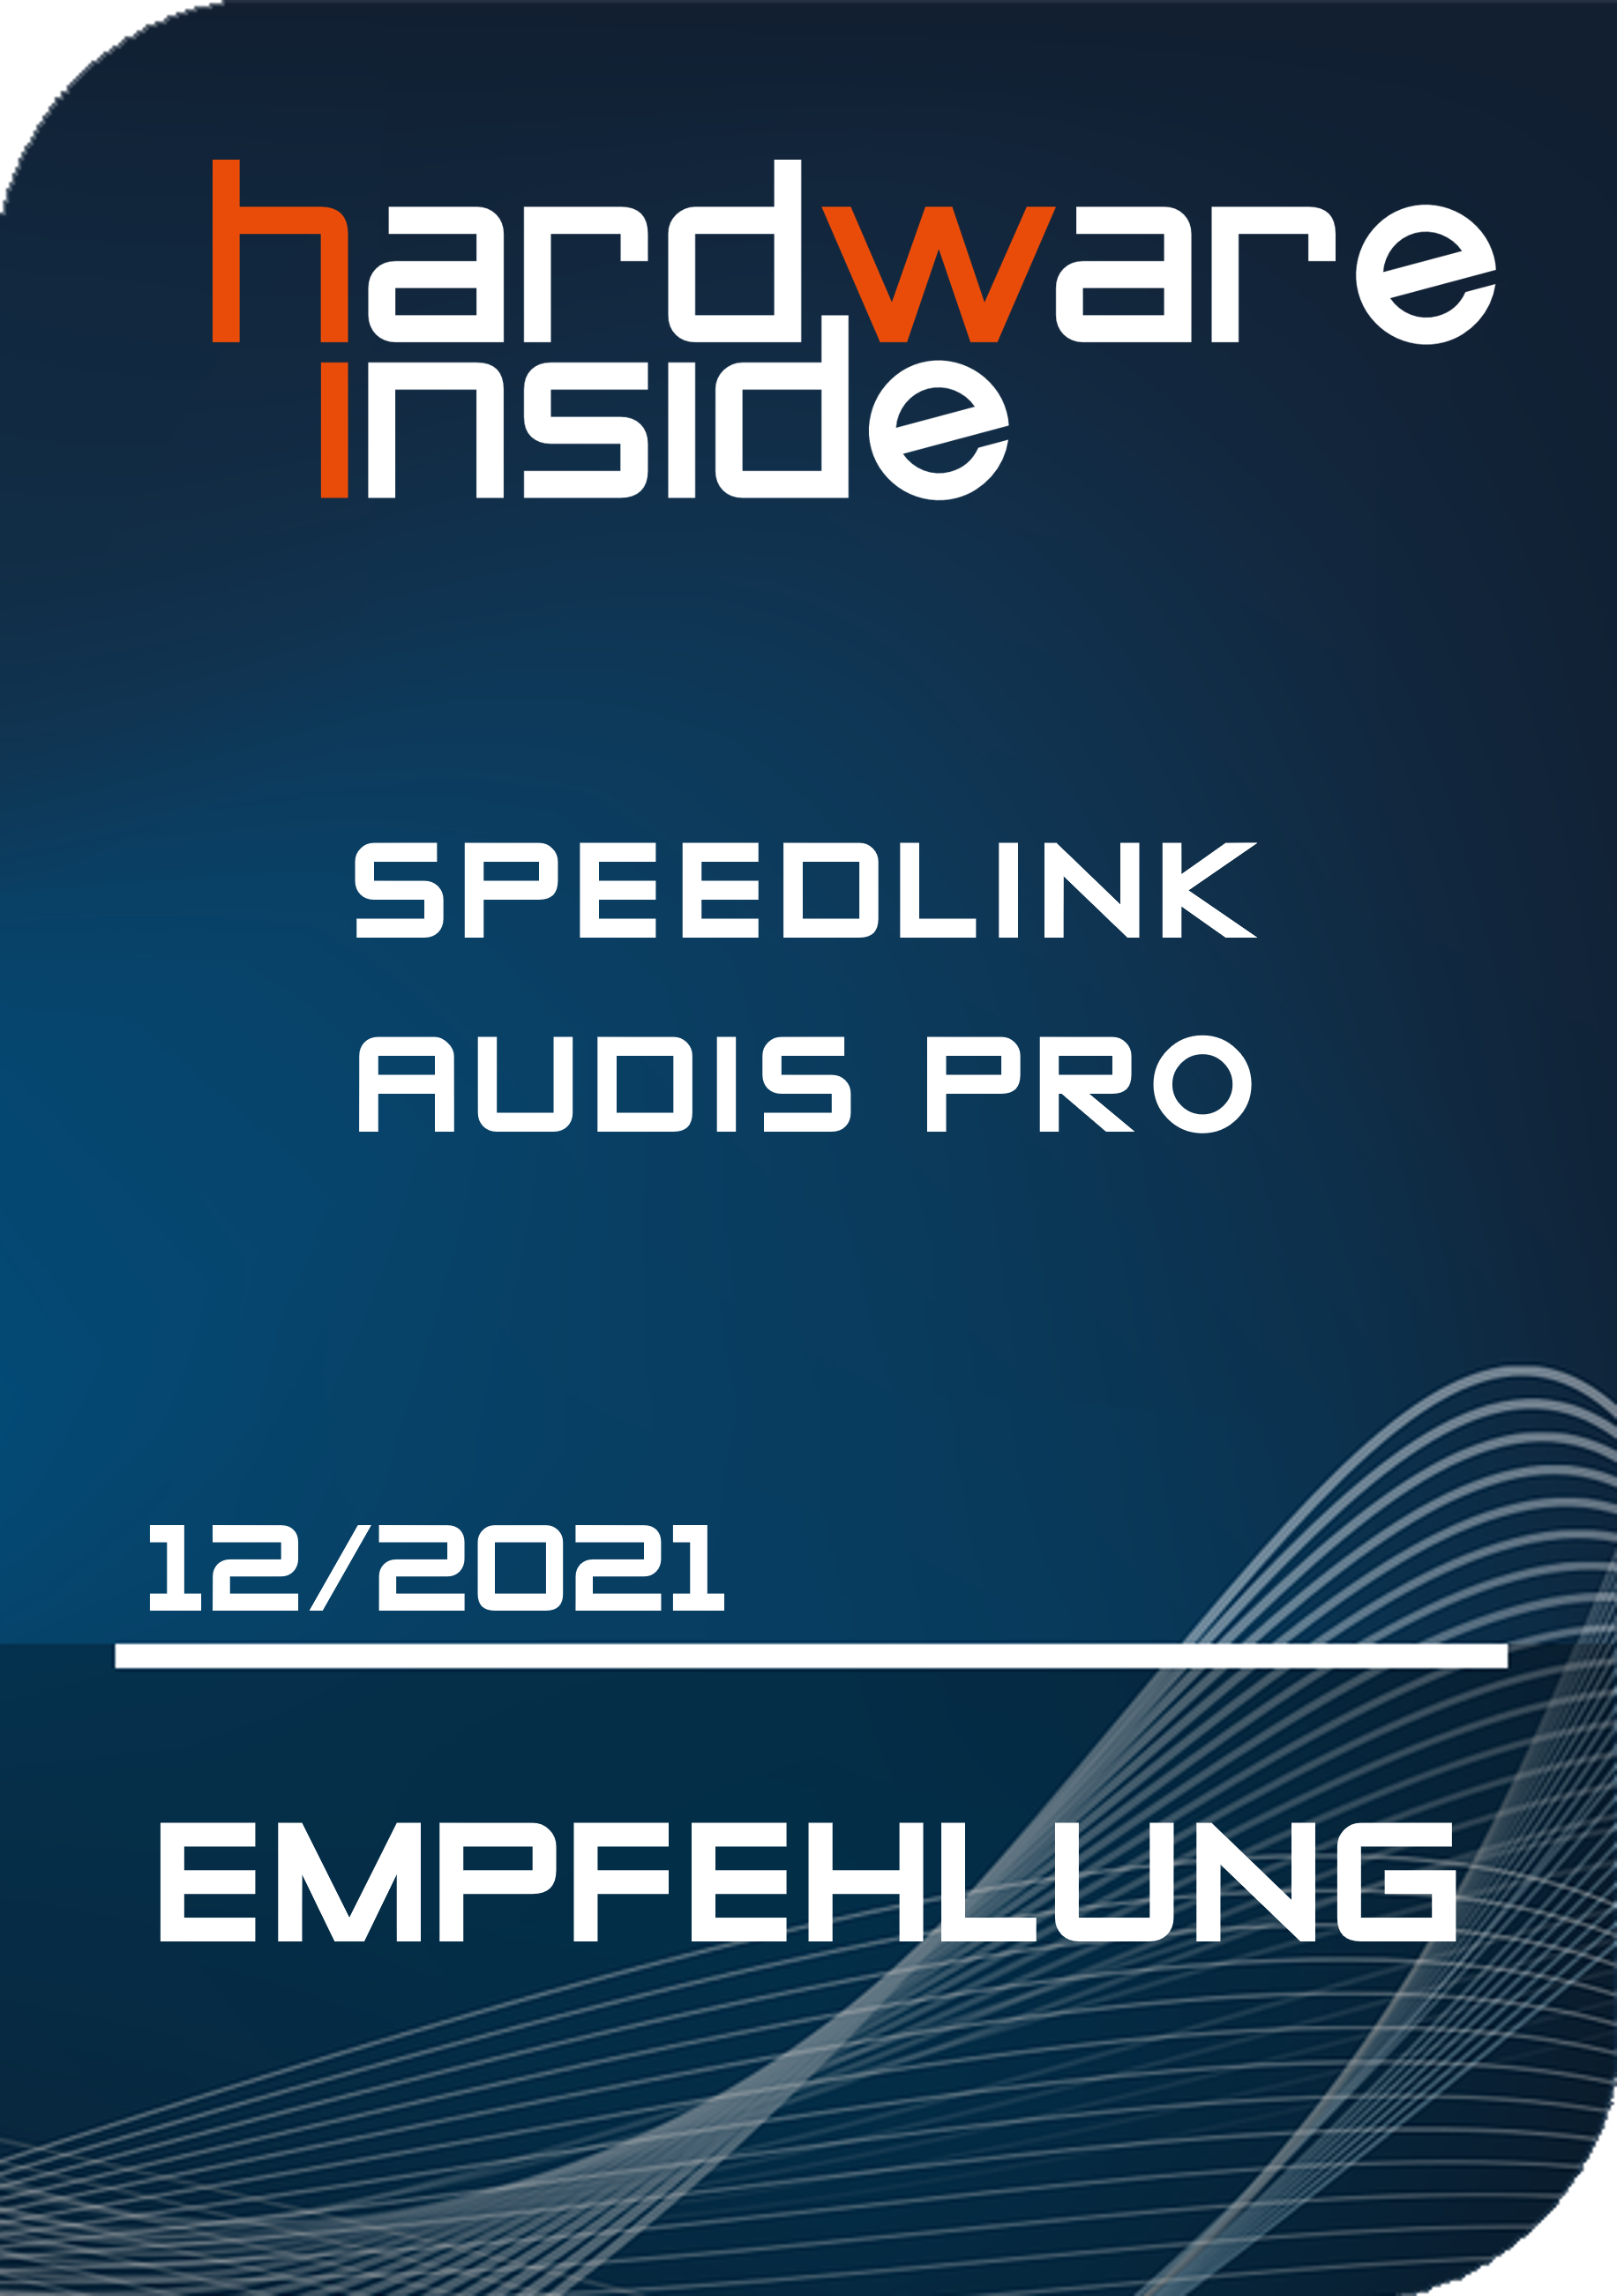 speedlink-audispro-streaming-microphone-award.png